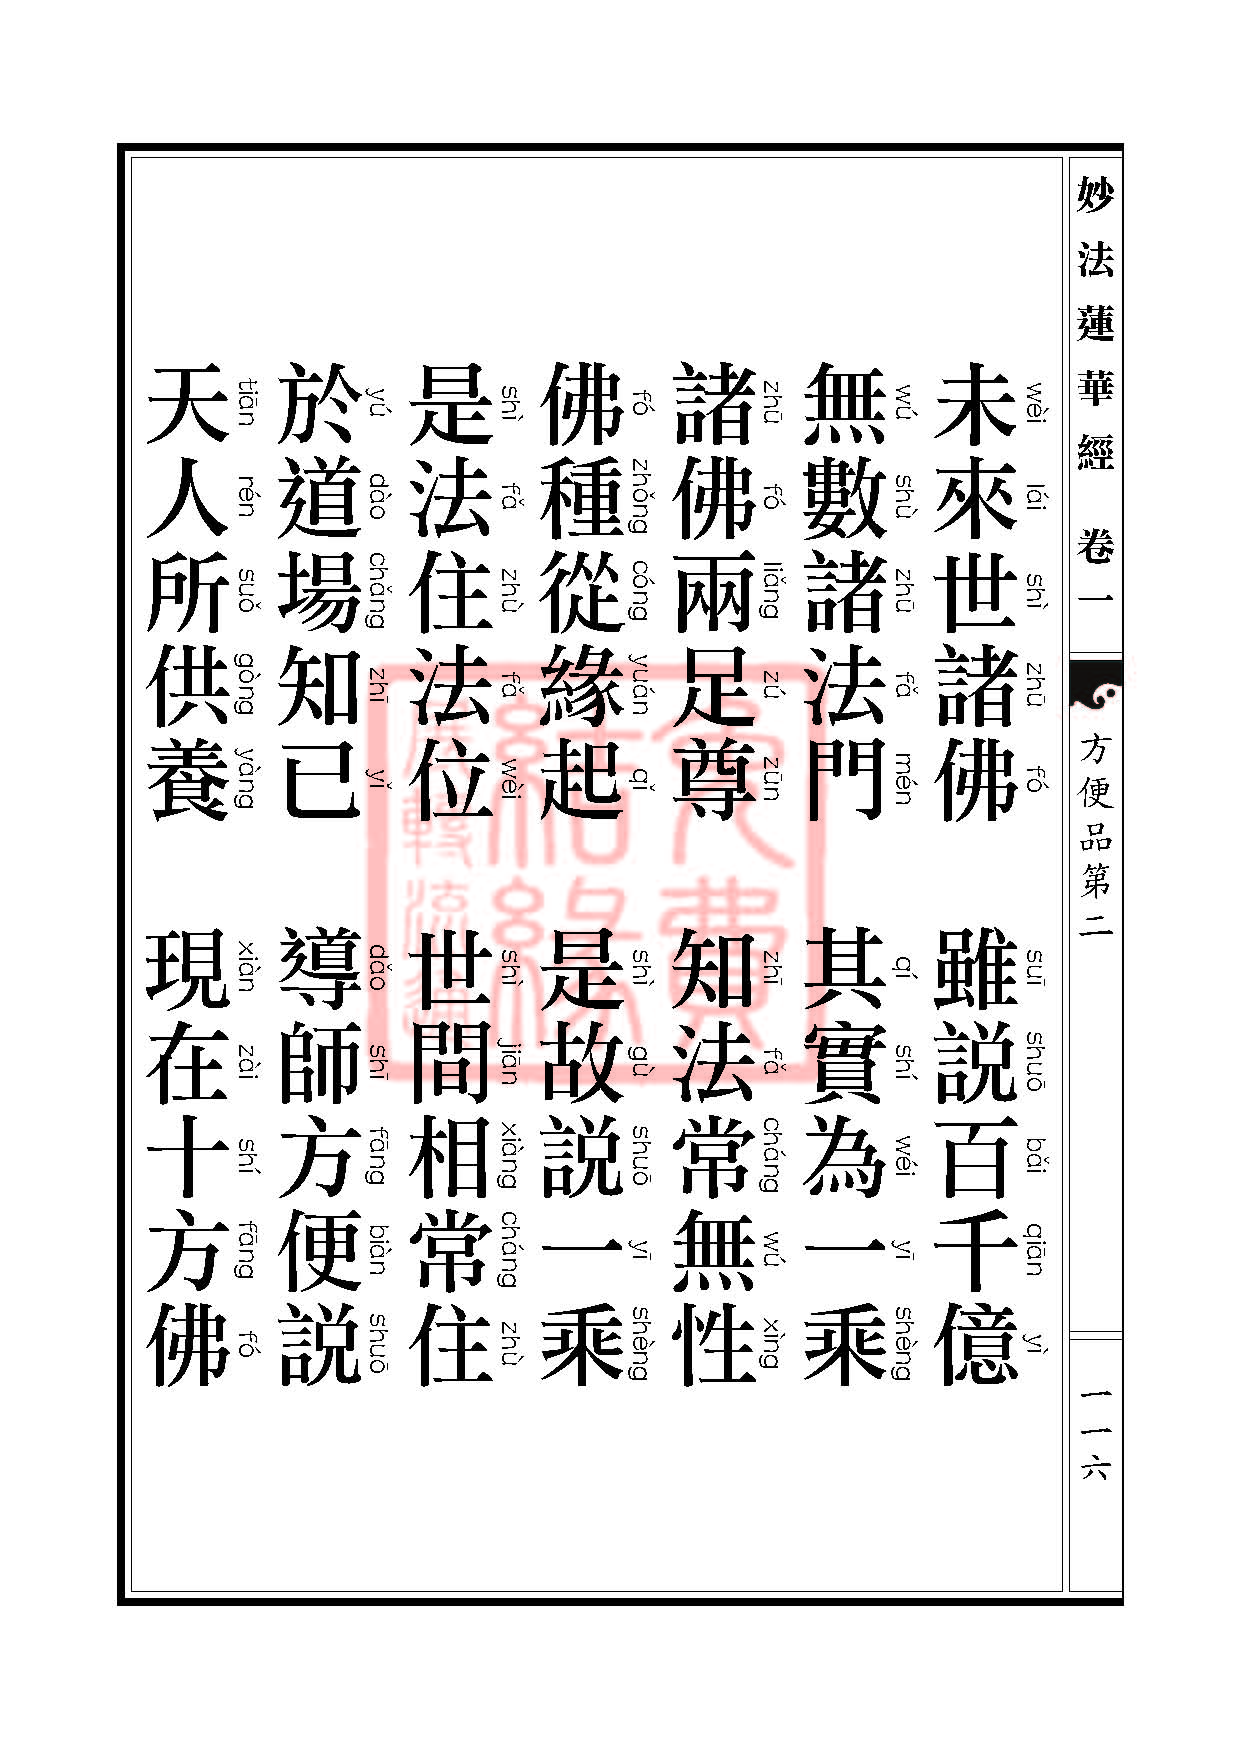 Book_FHJ_HK-A6-PY_Web_ҳ_116.jpg